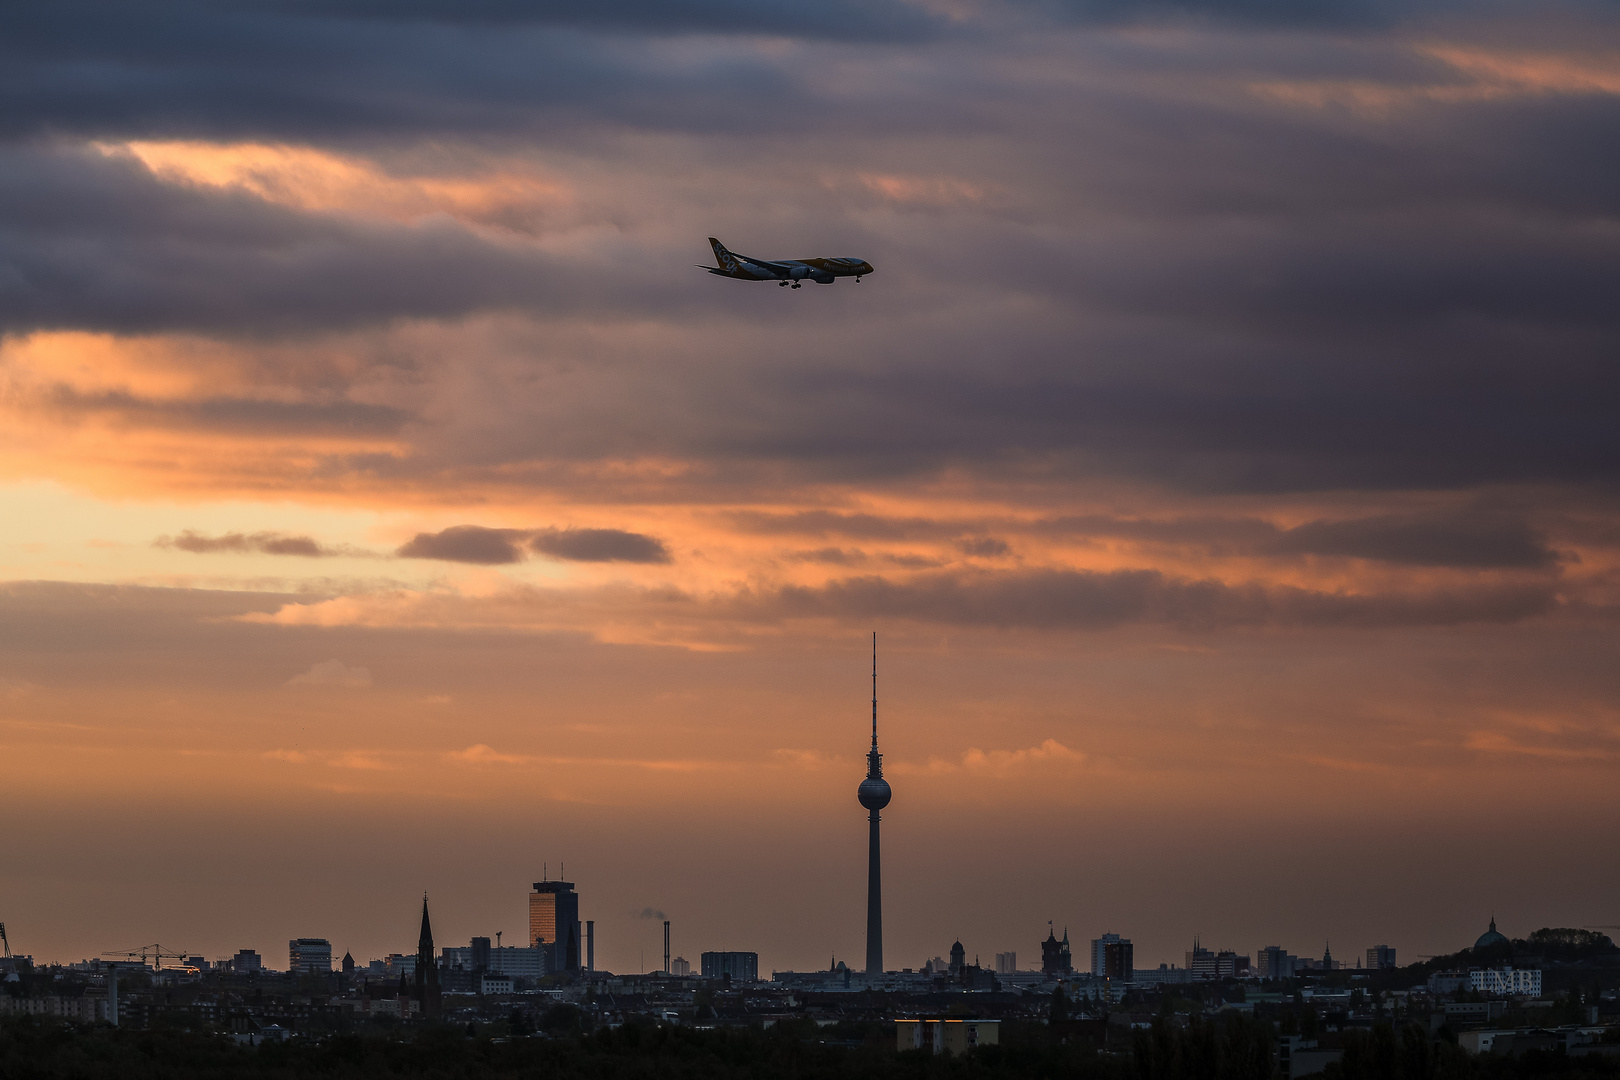 Landing in Berlin